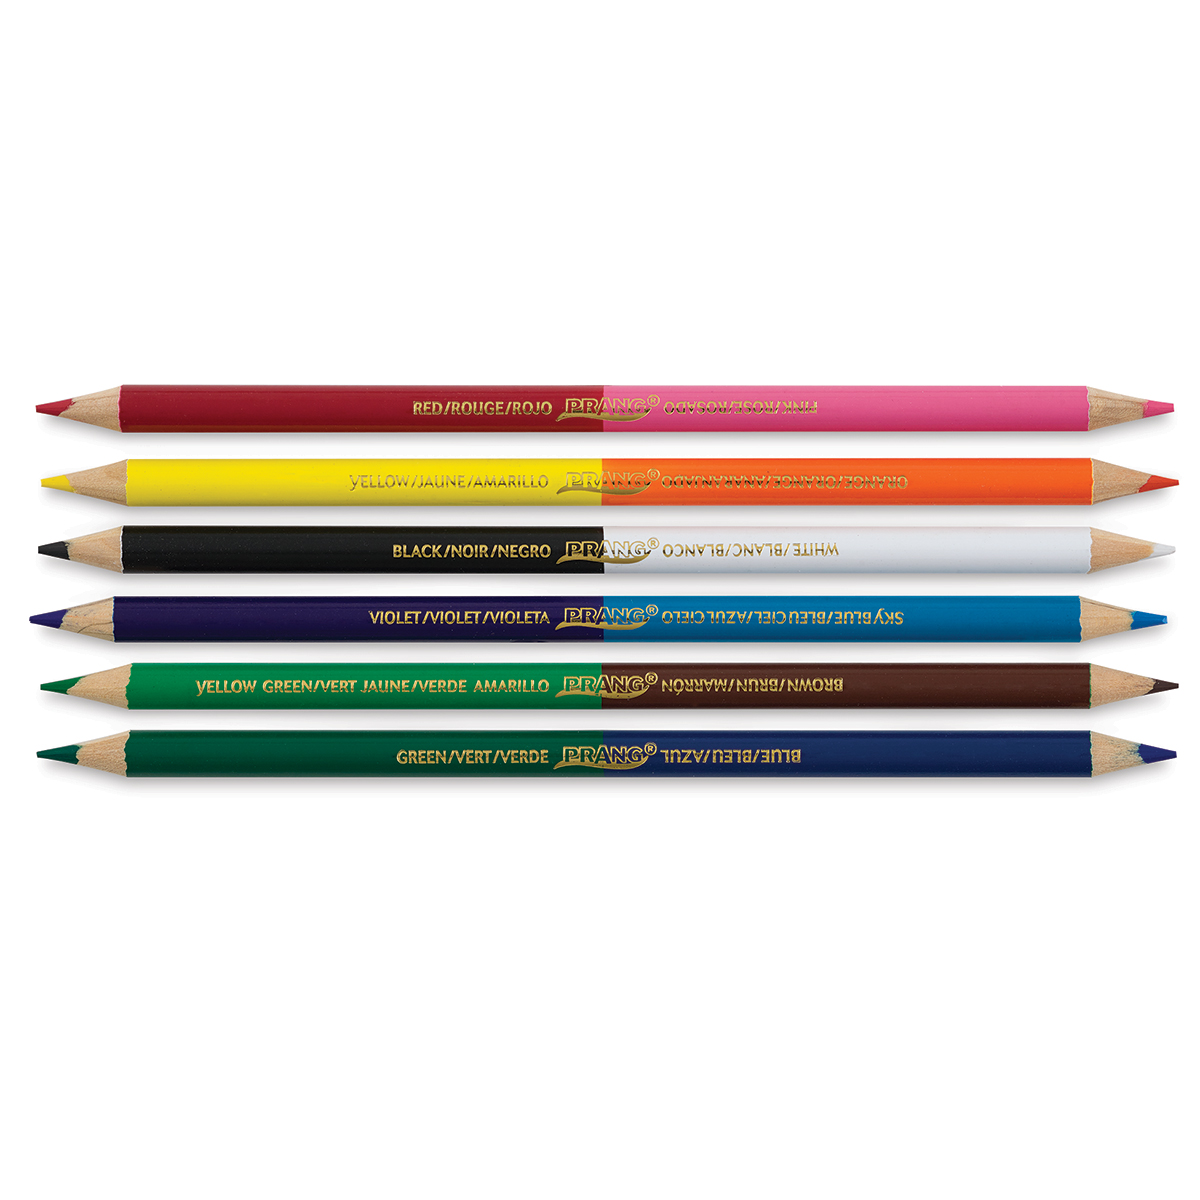 Prang DuoColor Colored Pencil Sets